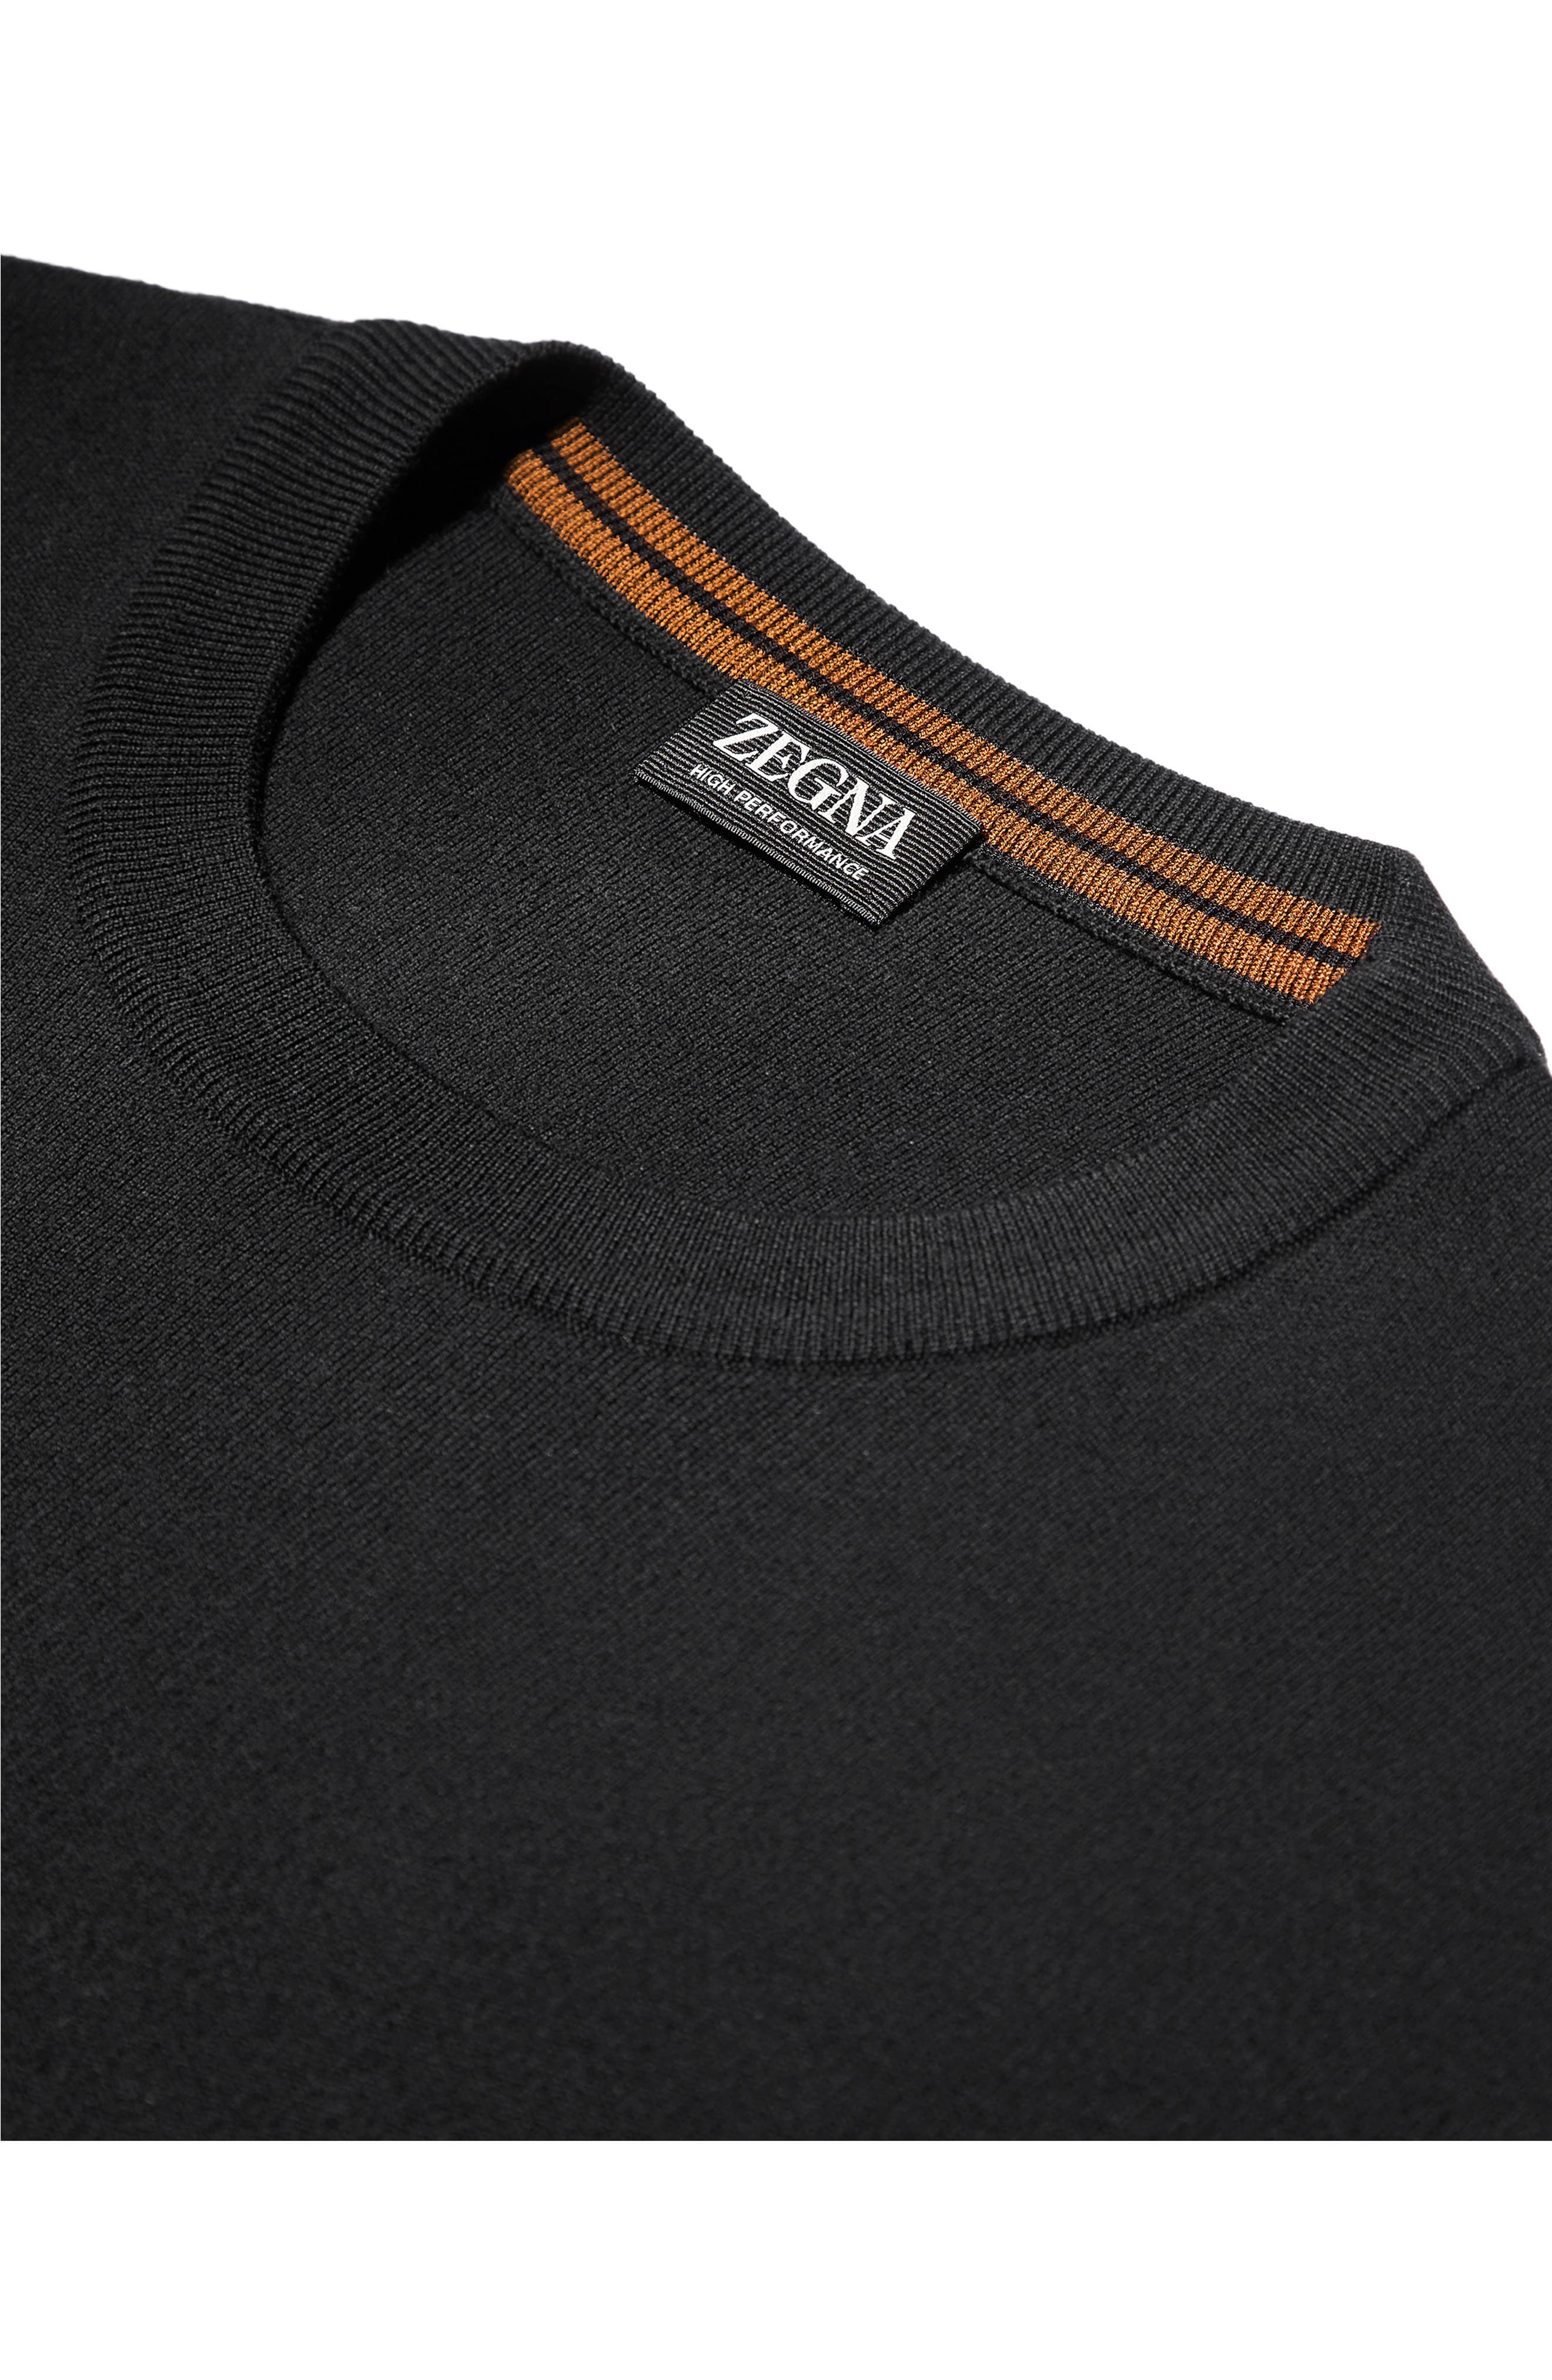 Zegna side stripe detail sweater - Grey